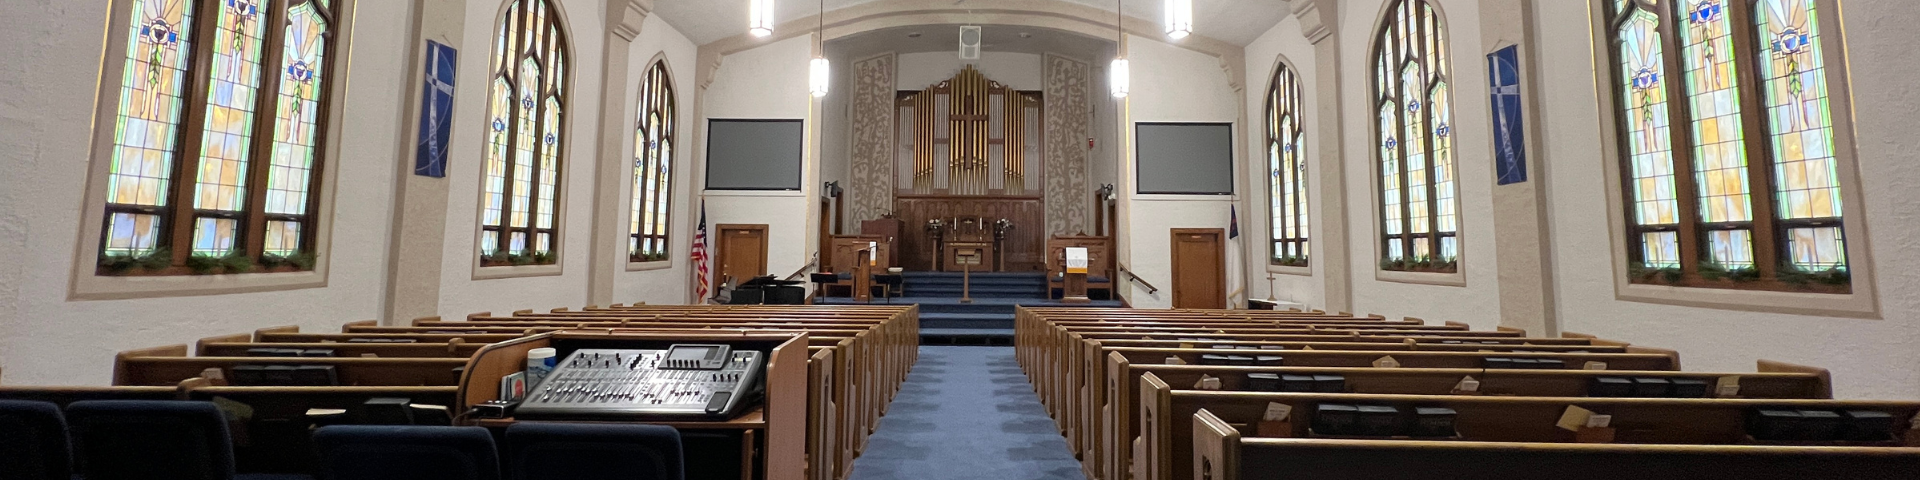 Grace United Methodist Church sanctuary